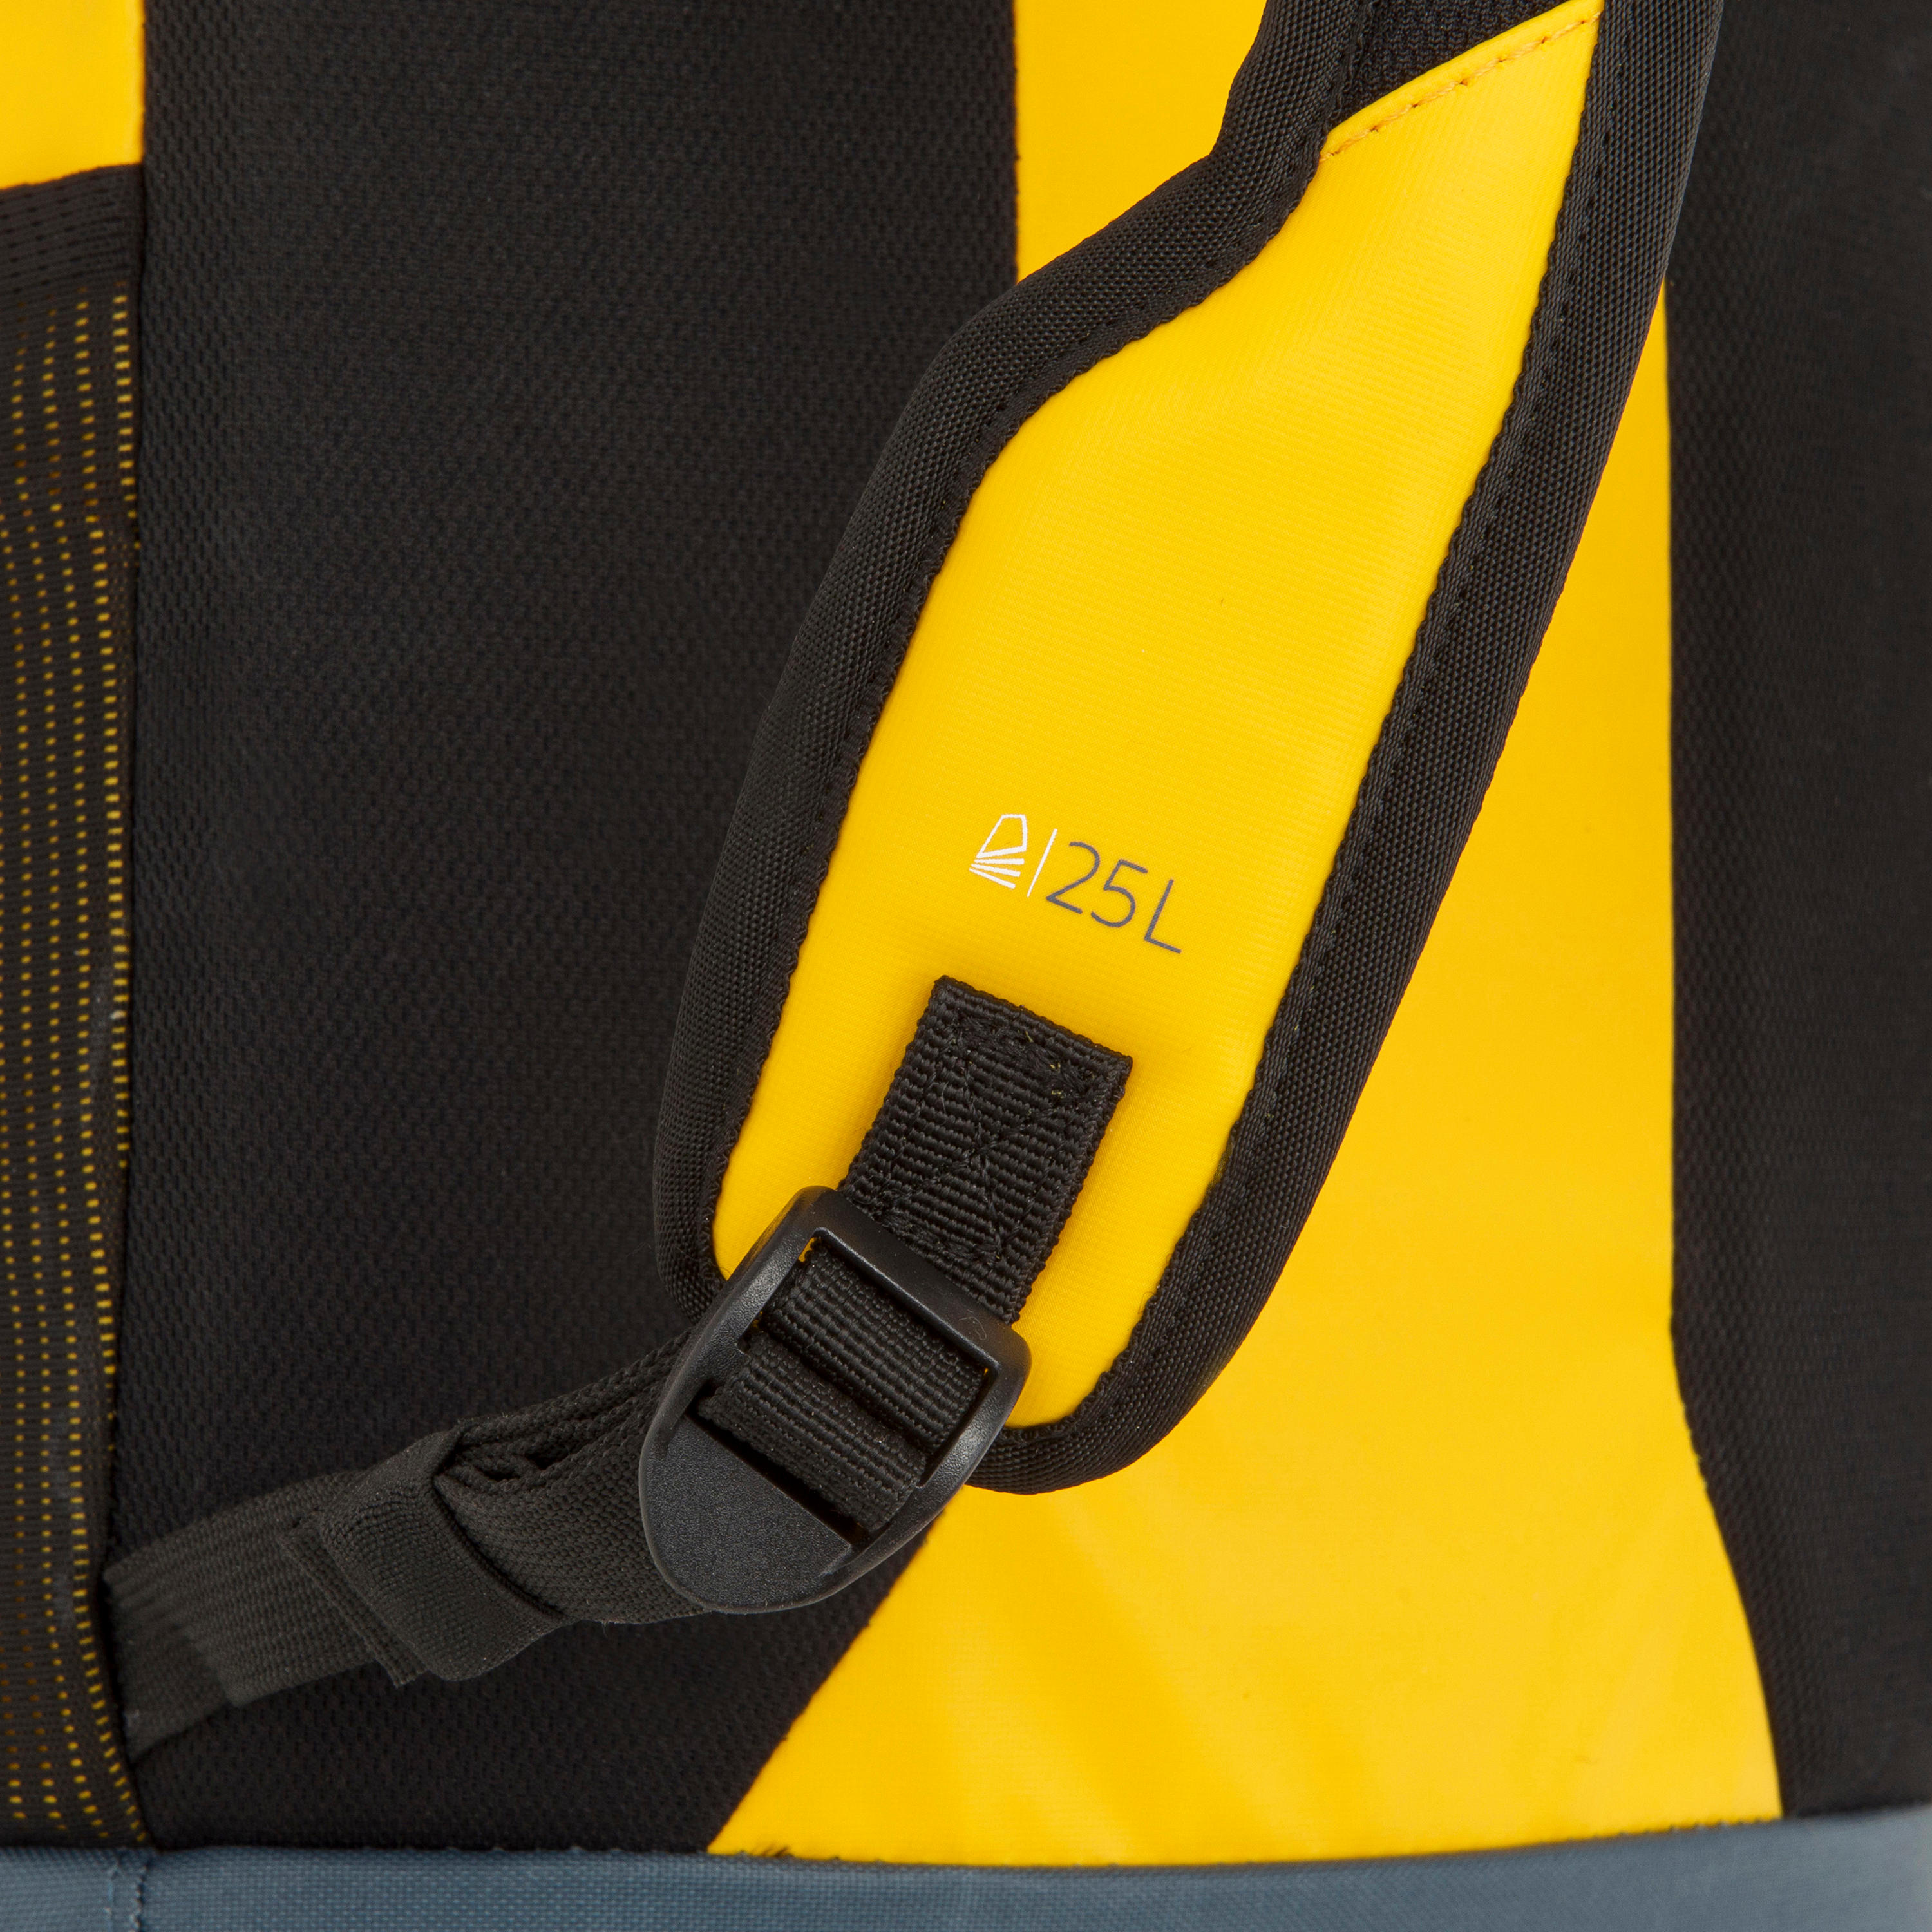 Waterproof backpack 25 litres - Yellow 9/13